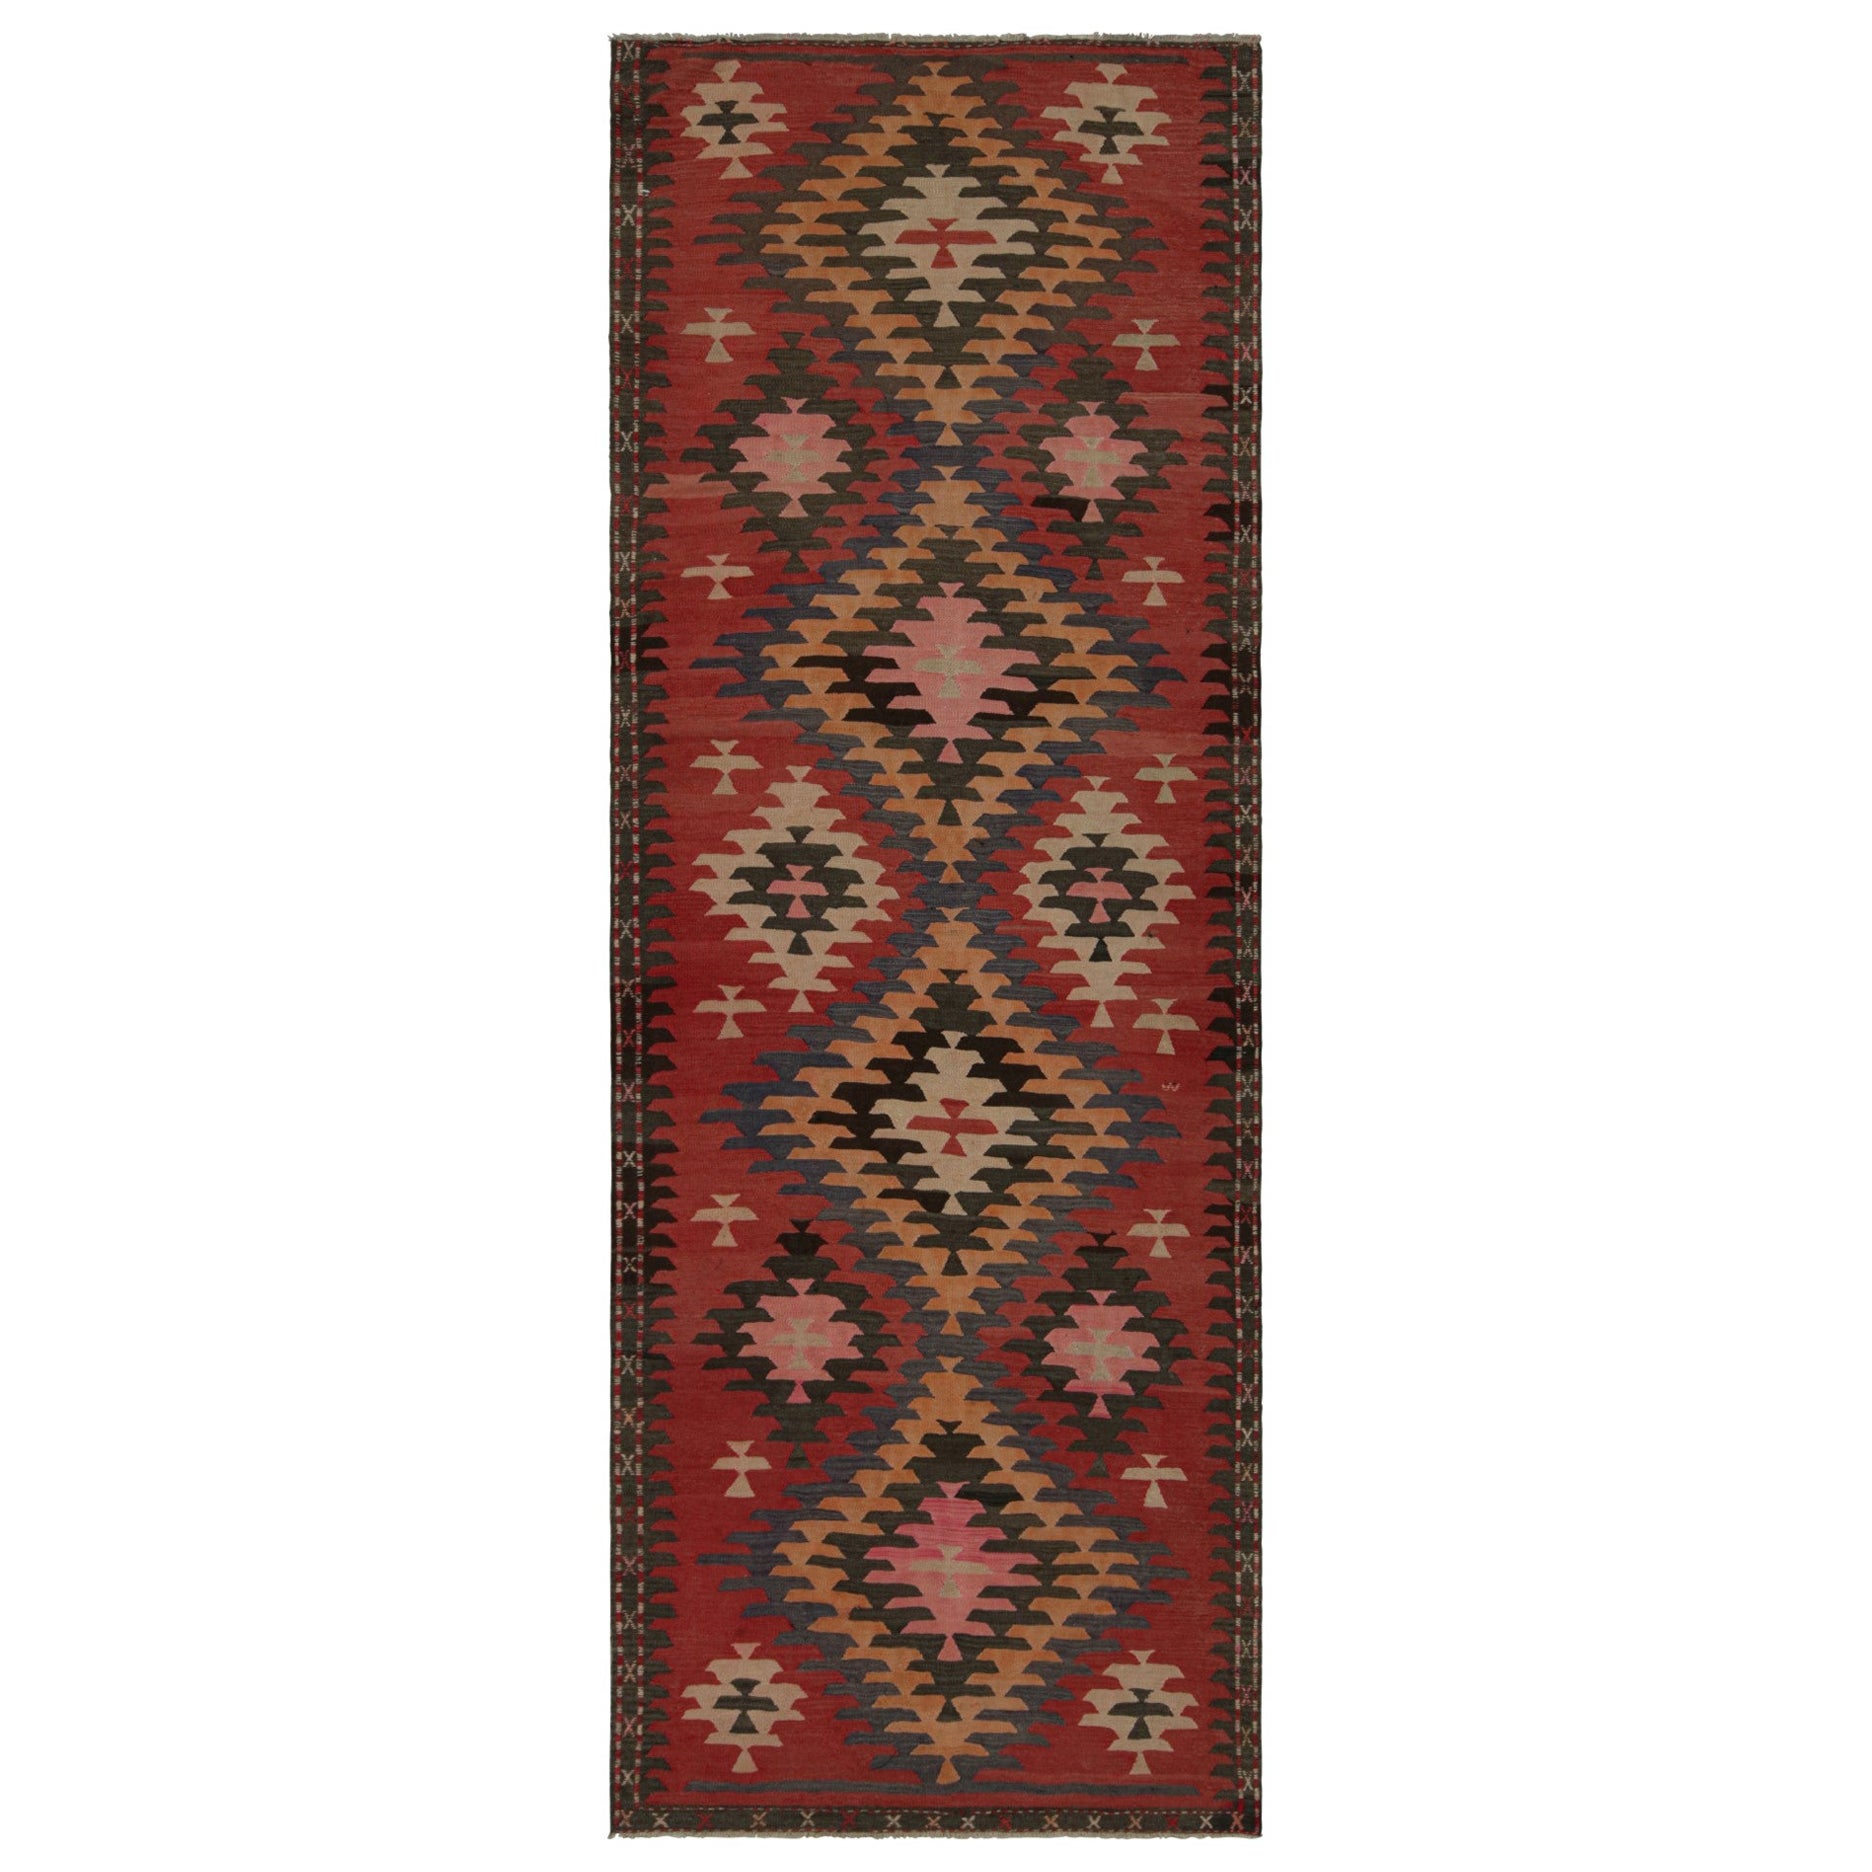 Vintage Afghani Tribal Kilim Polychromatic Geometric Patterns, from Rug & Kilim For Sale